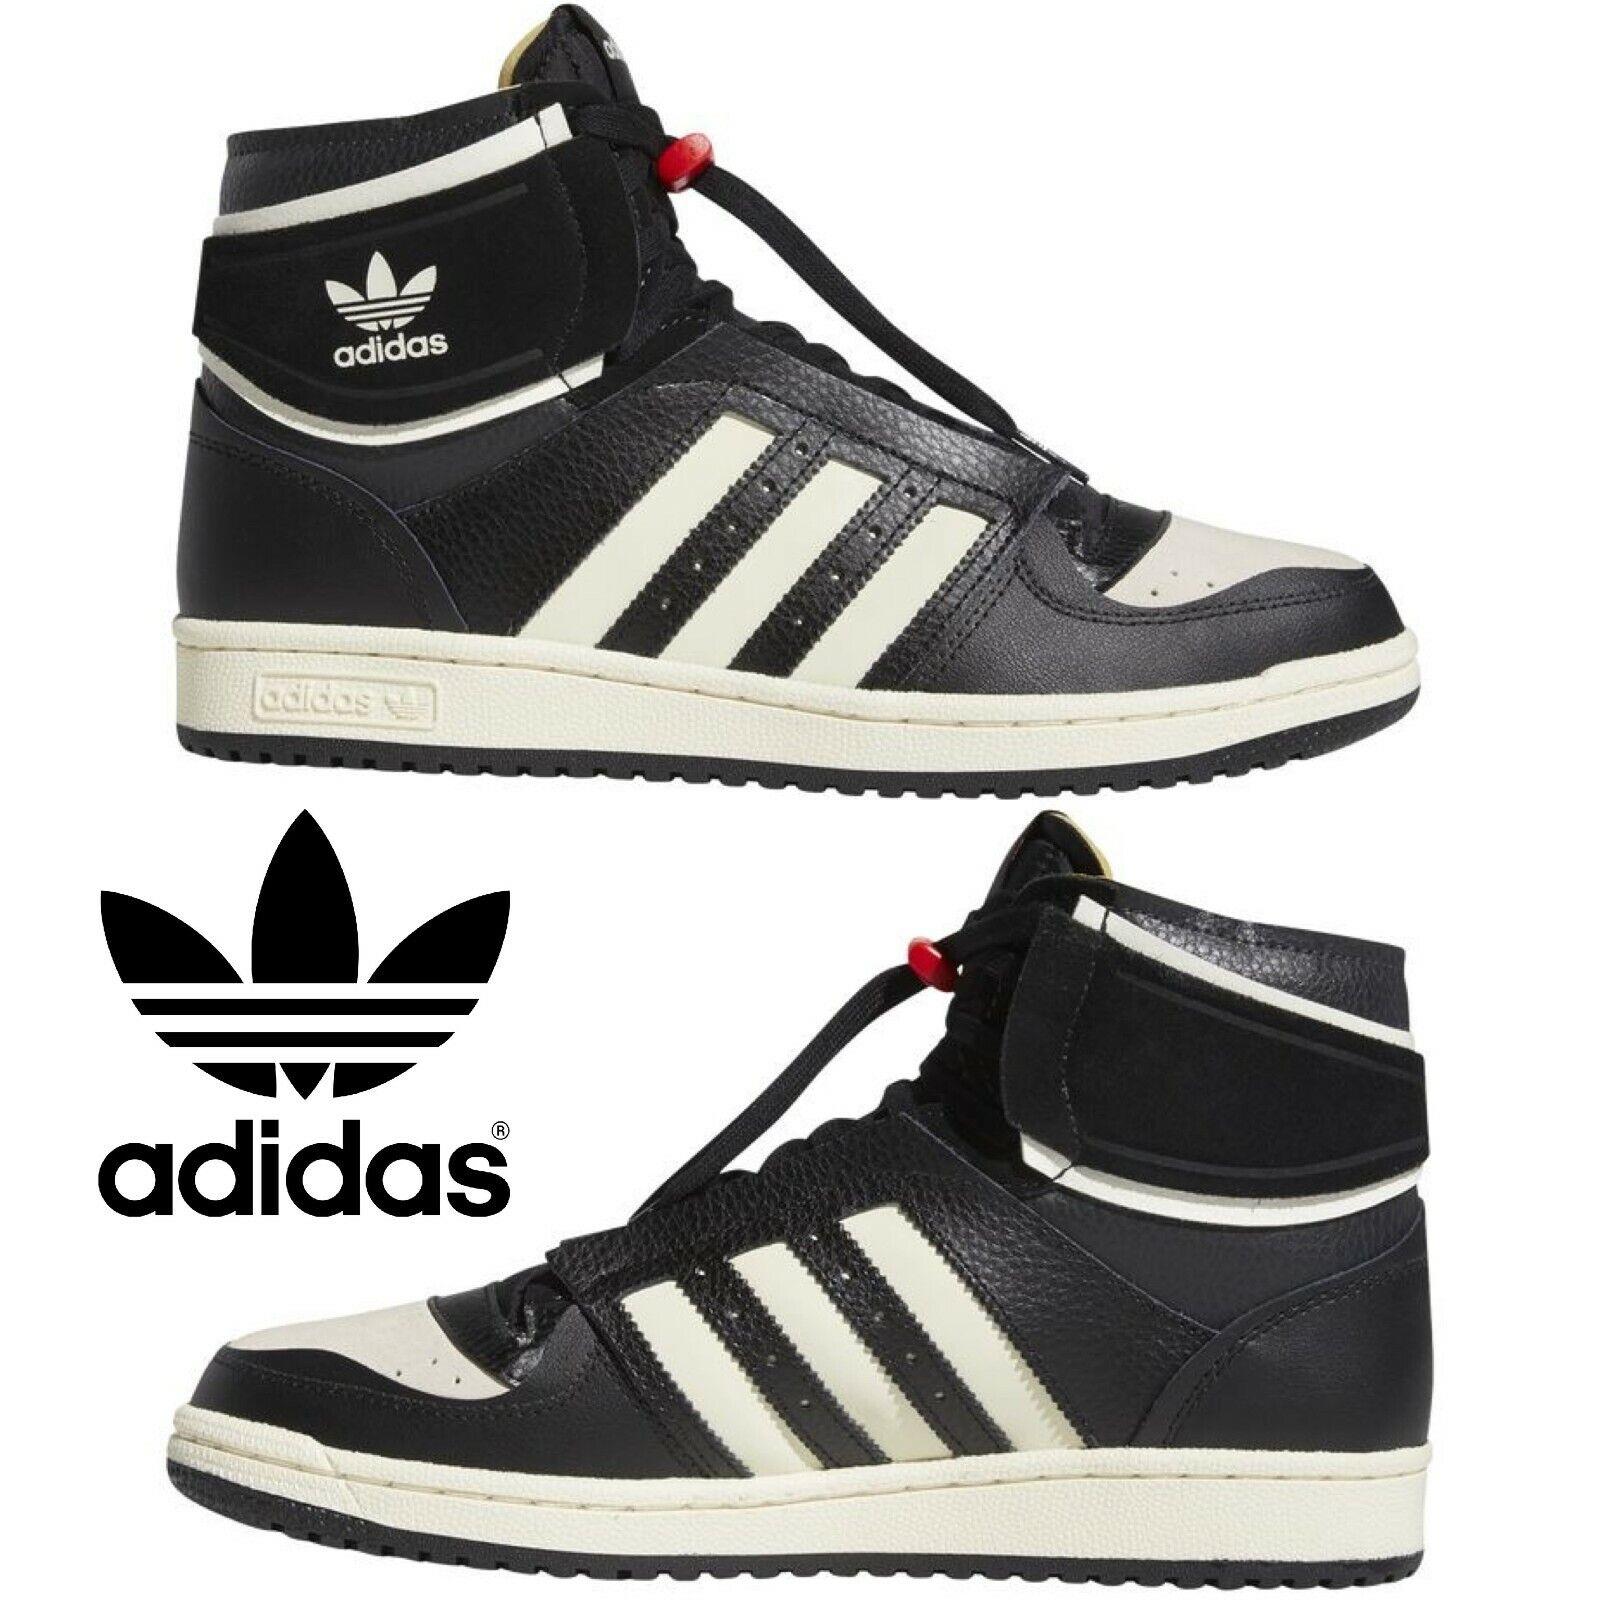 Adidas Originals Top Ten Mid Men`s Sneakers Comfort Sport Casual Shoes Black